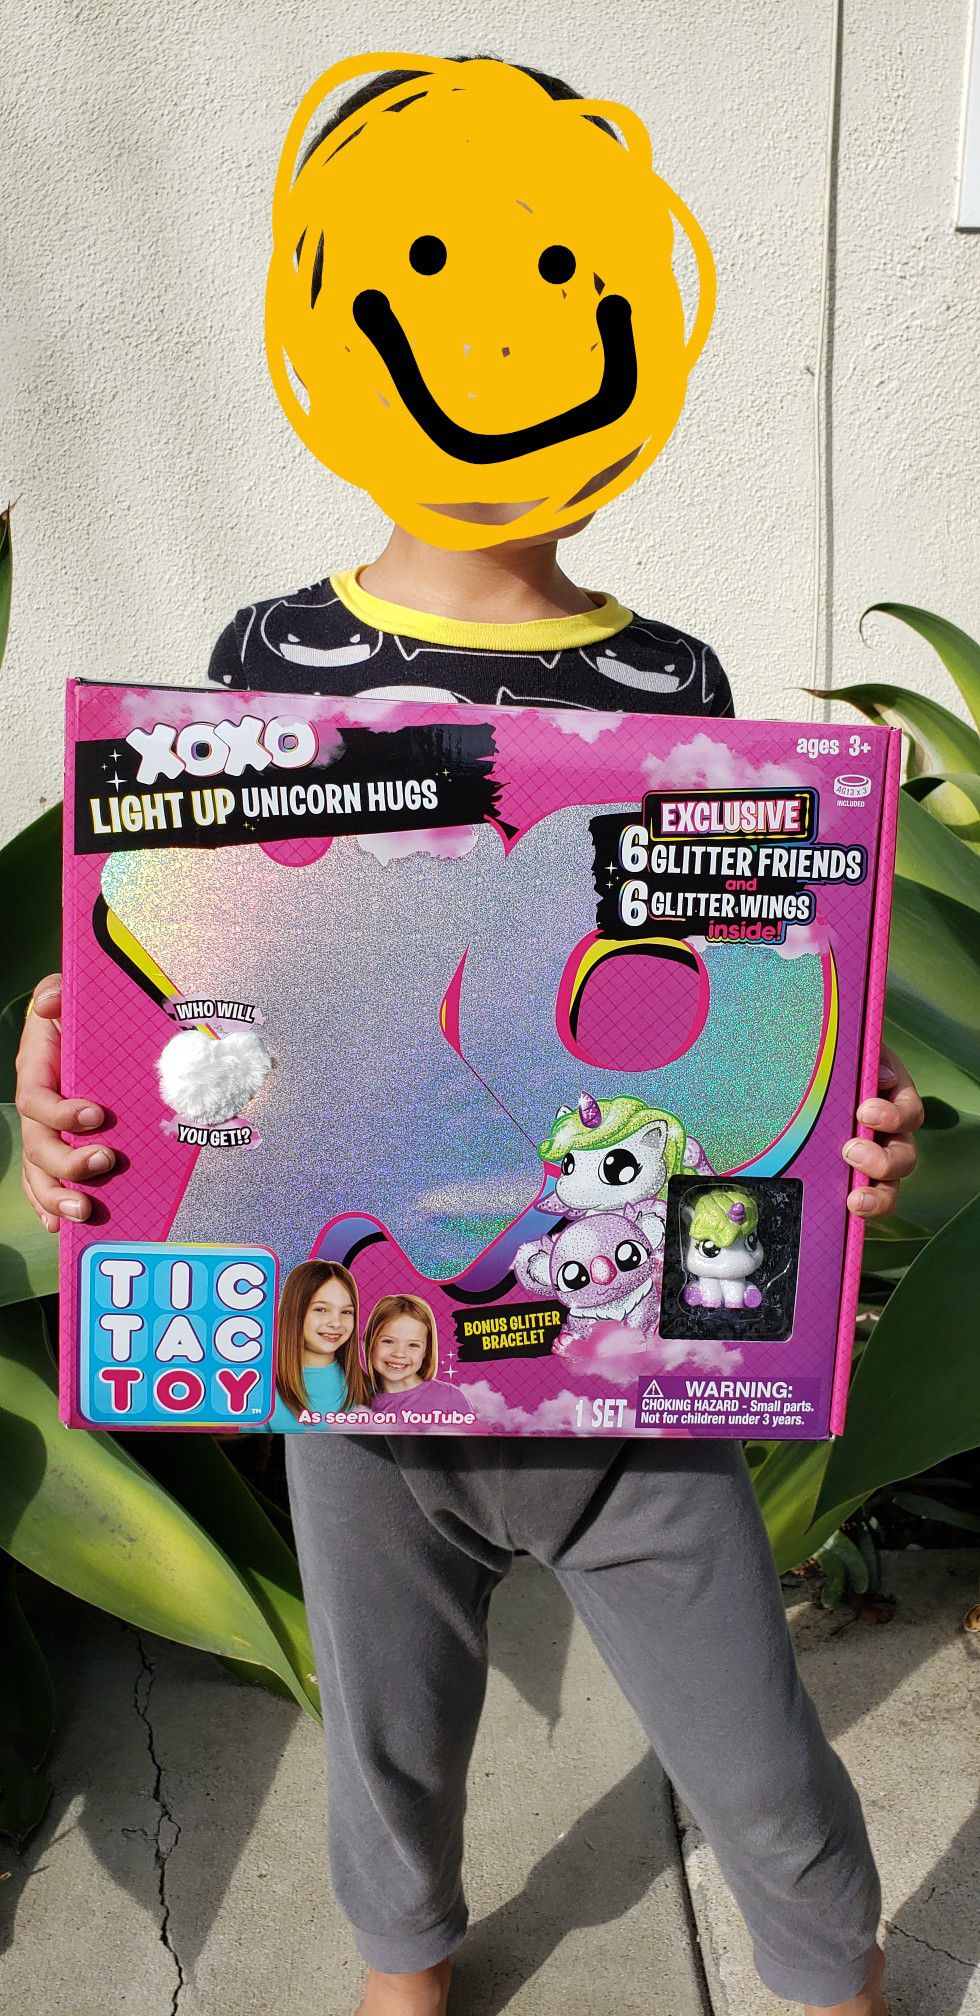 Tic Tac Toy LOL Surprise Light Up Unicorn stuffed animal toy. BRAND NEW $10.